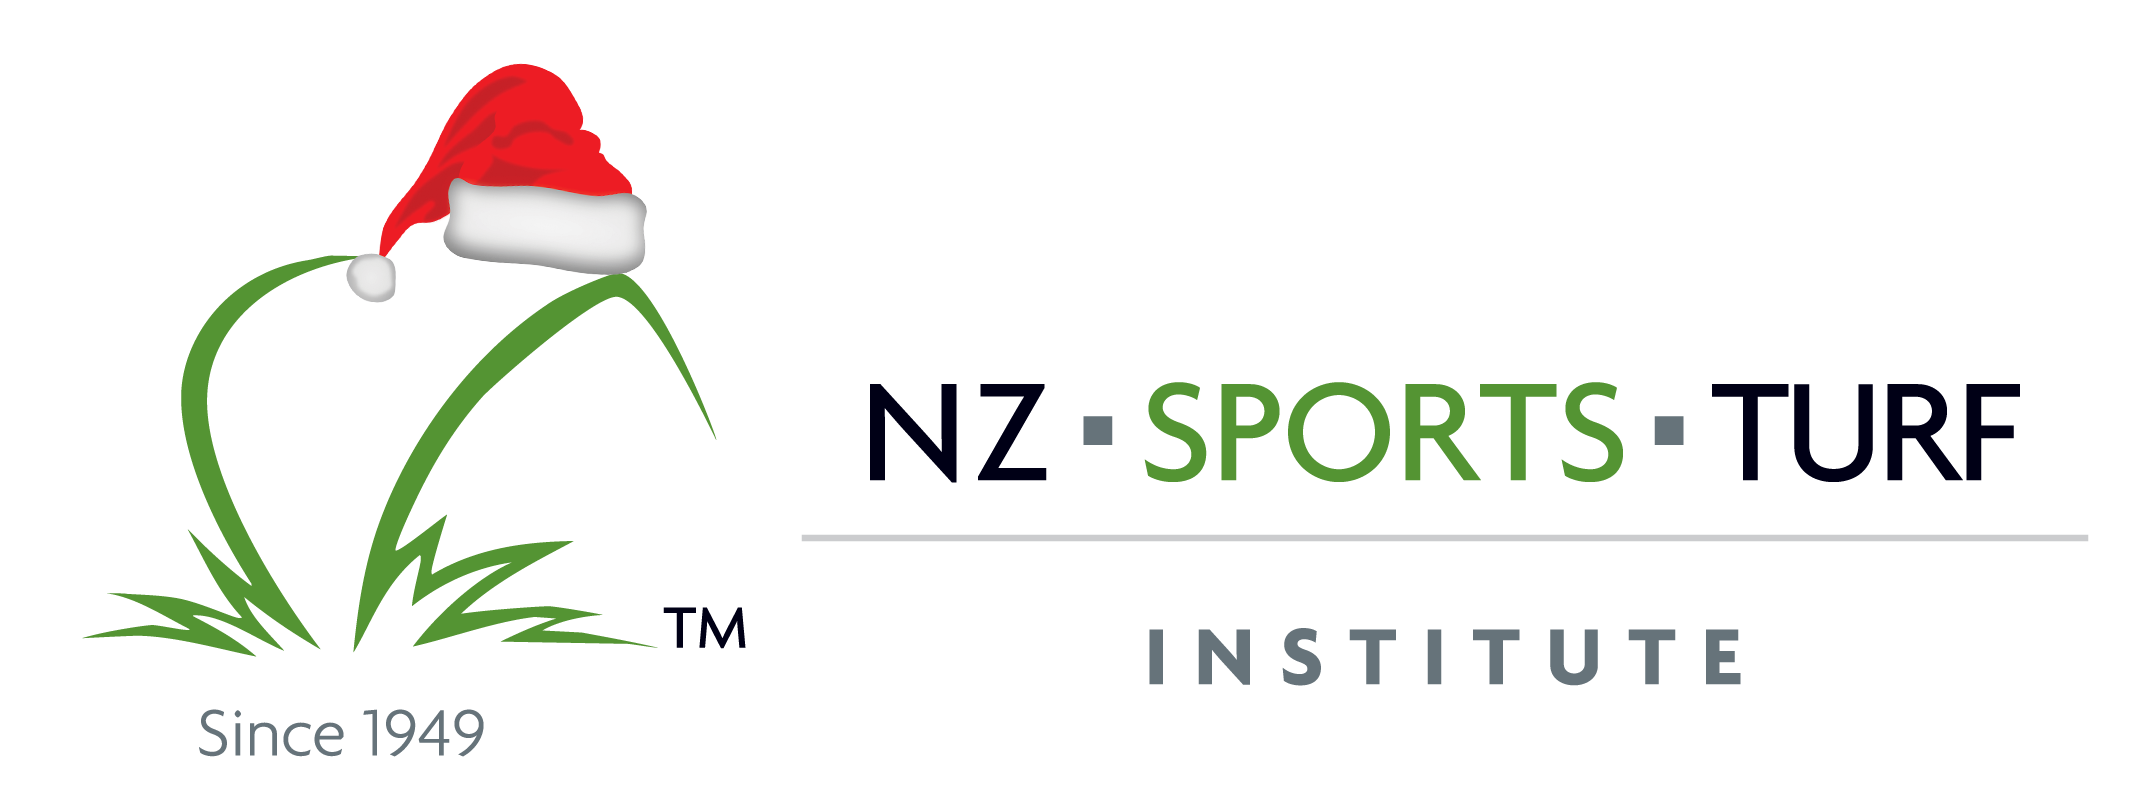 NZSTI logo with Santa hat on the grass kiwi